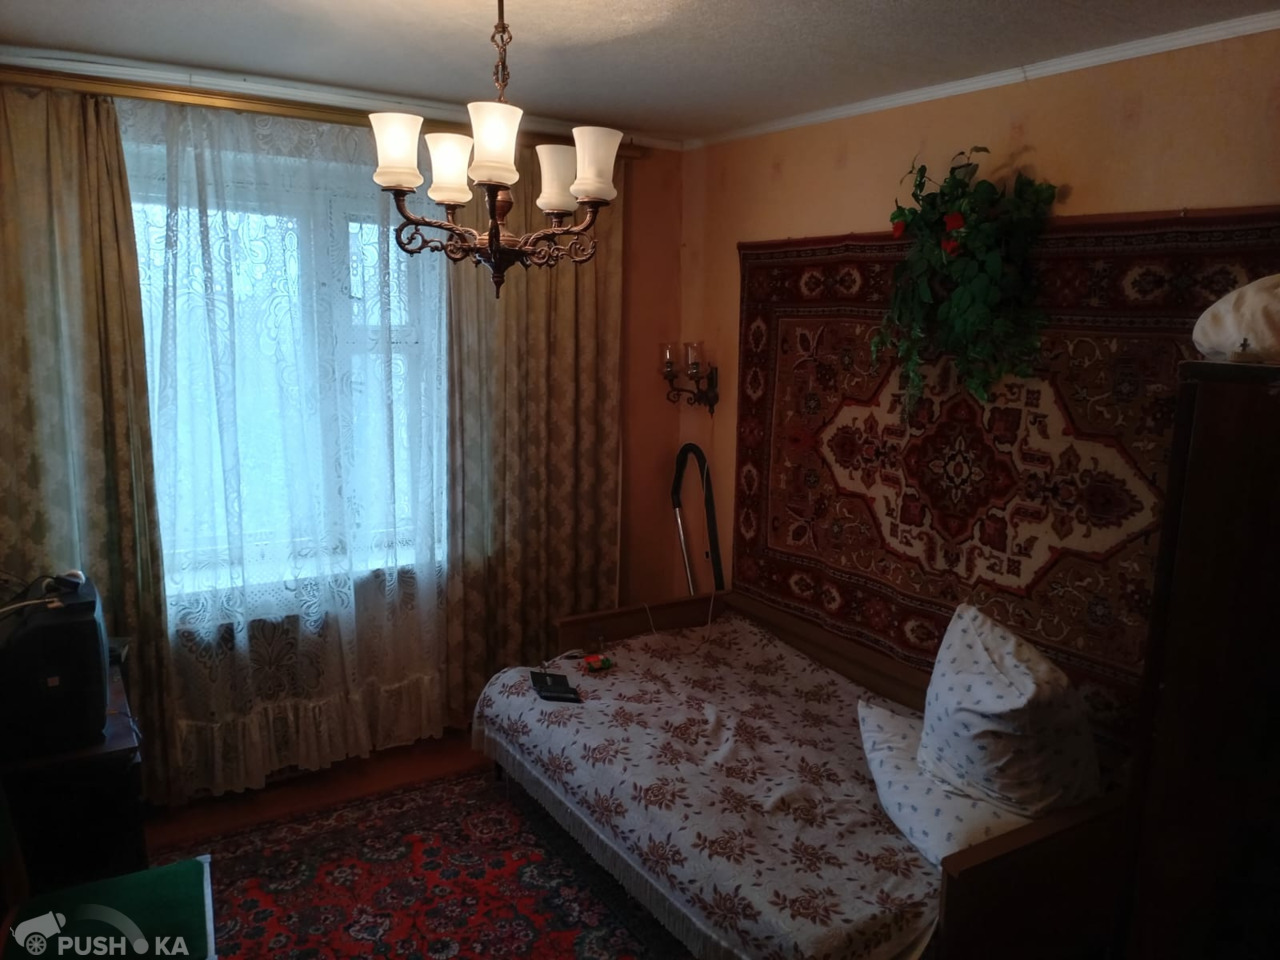 Продаётся 2-комнатная квартира 48.0 кв.м. этаж 8/10 за 3 450 000 руб 